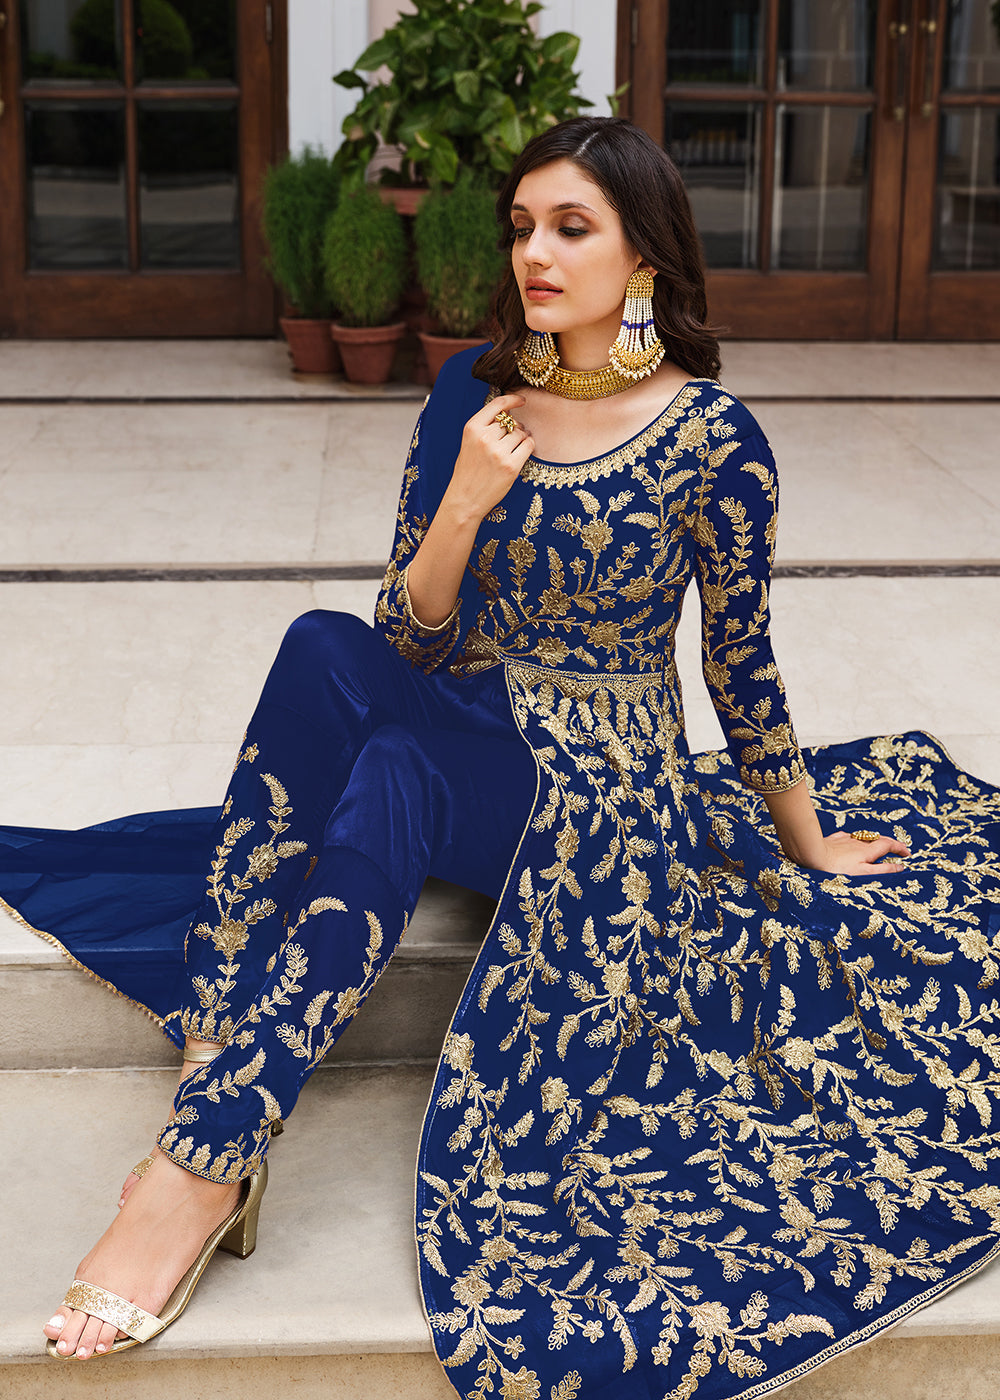 Buy Now Lovely Navy Blue Designer Front Slit Anarkali Dress Online in USA, UK, Australia, New Zealand, Canada & Worldwide at Empress Clothing.